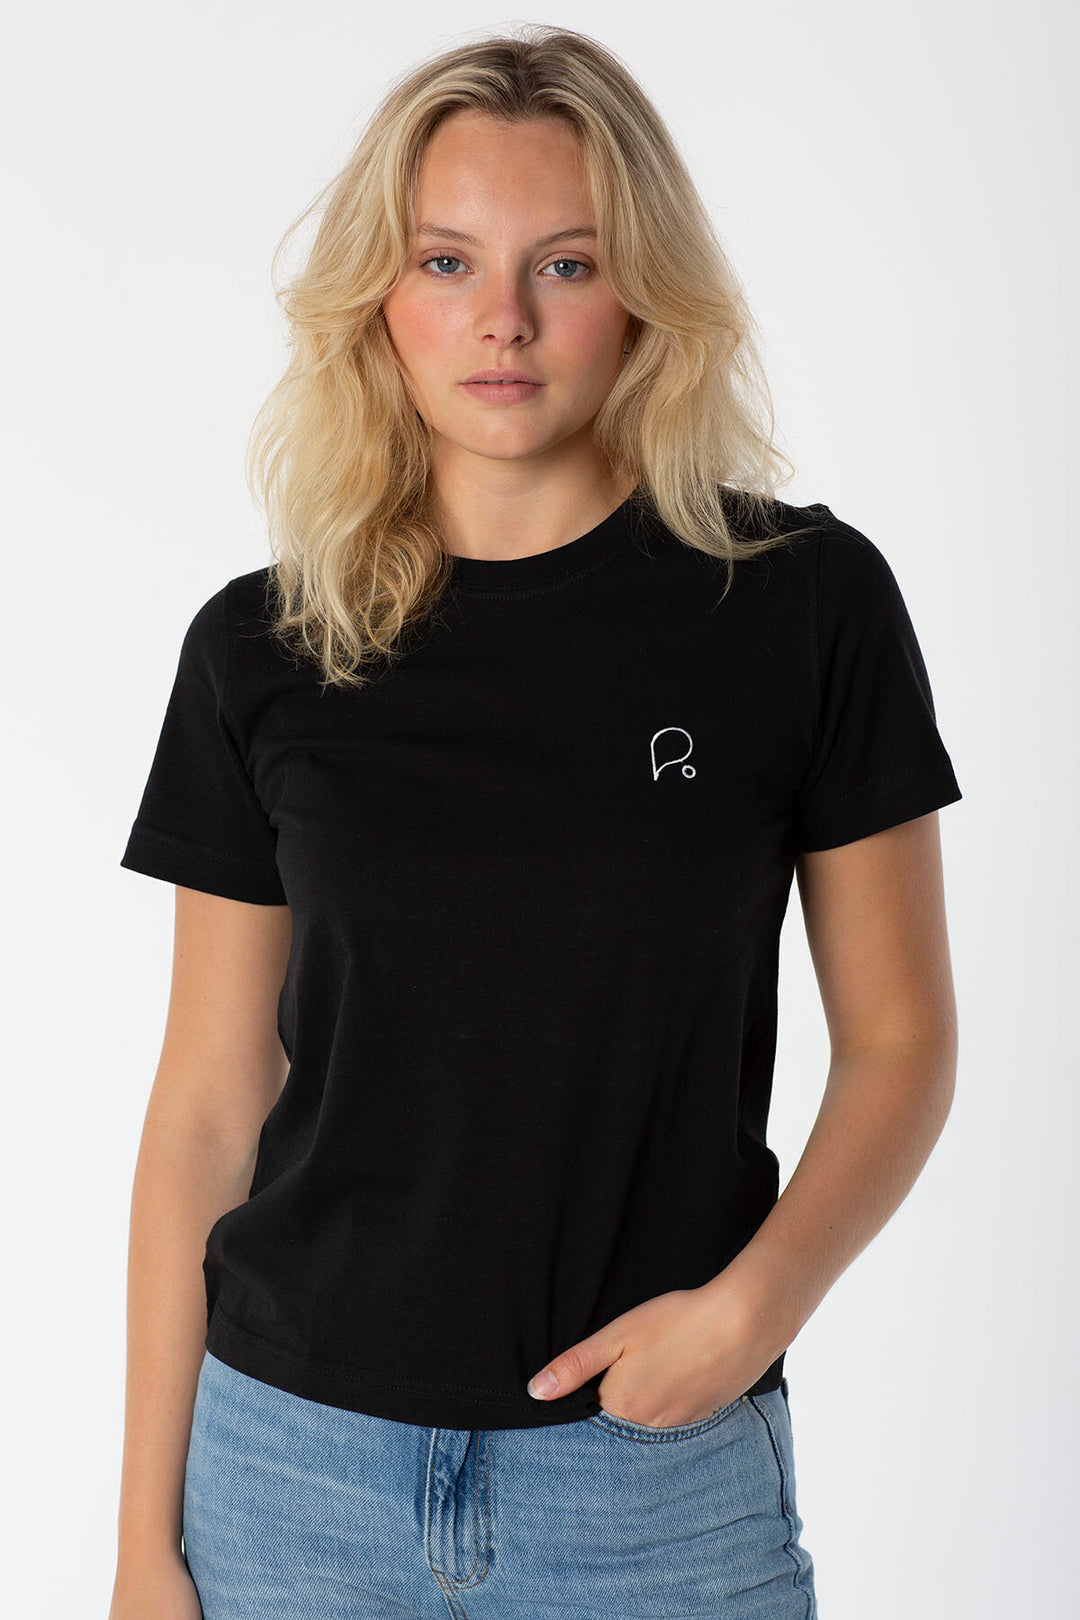 Signature Black - Think Sustainable T-shirt-T-shirts-PIRKANI